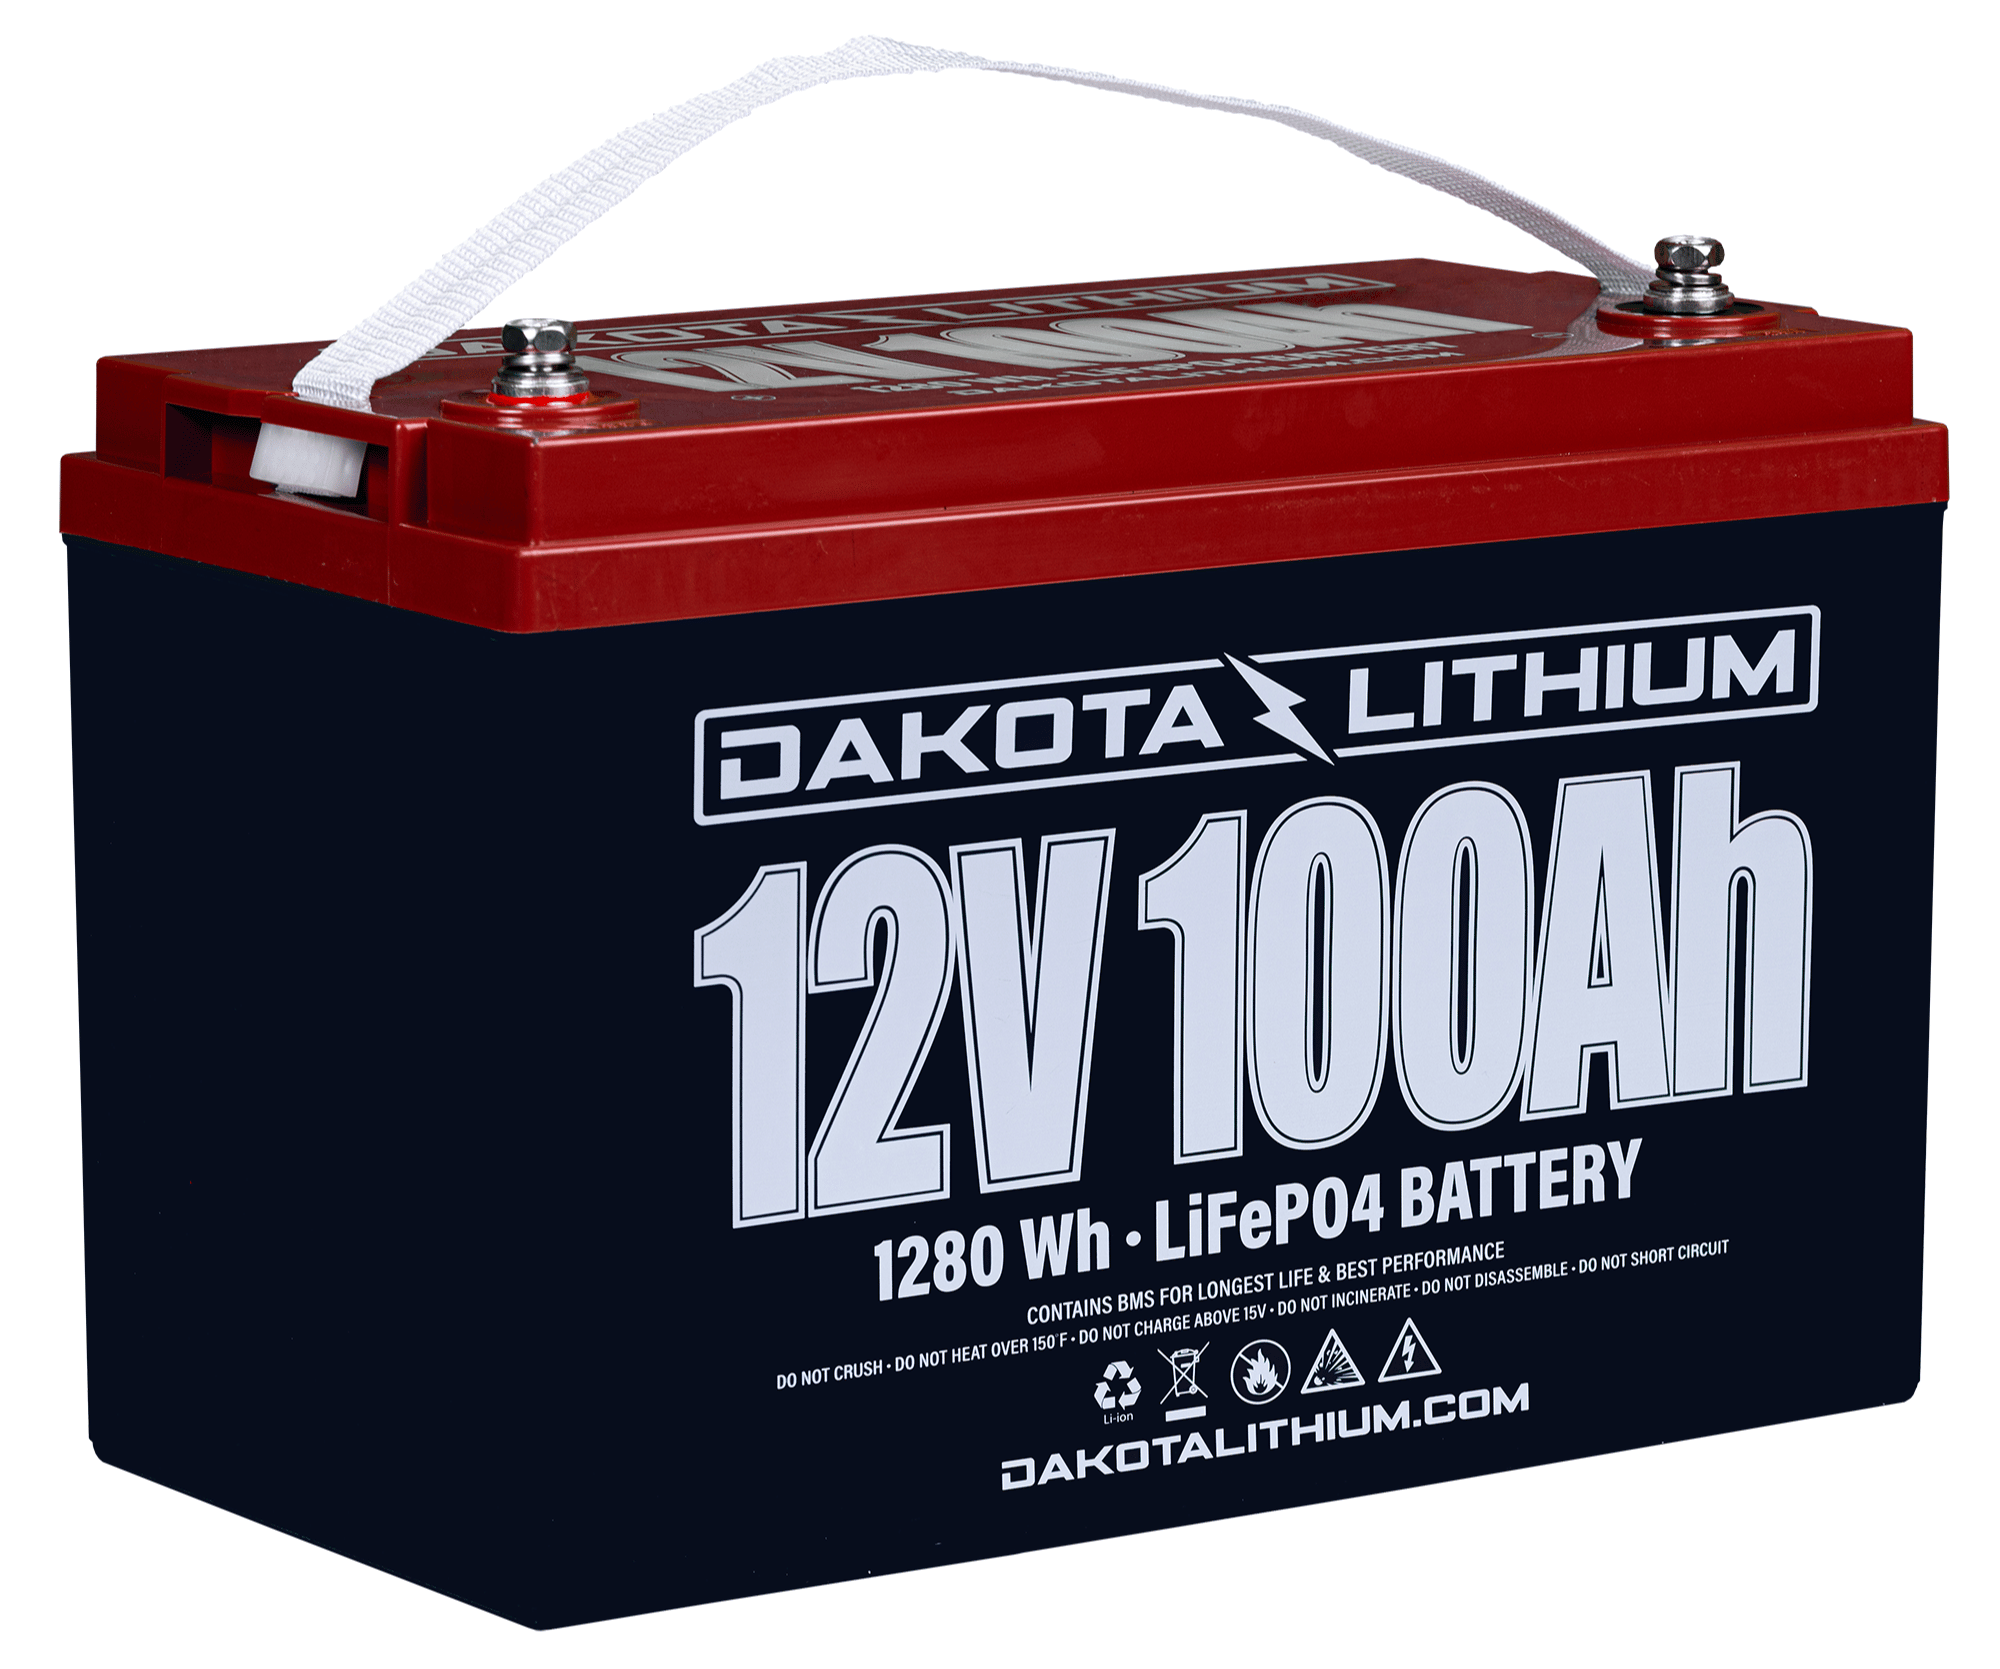 Dakota Lithium Powerbox 10, 12v 10Ah Battery Included